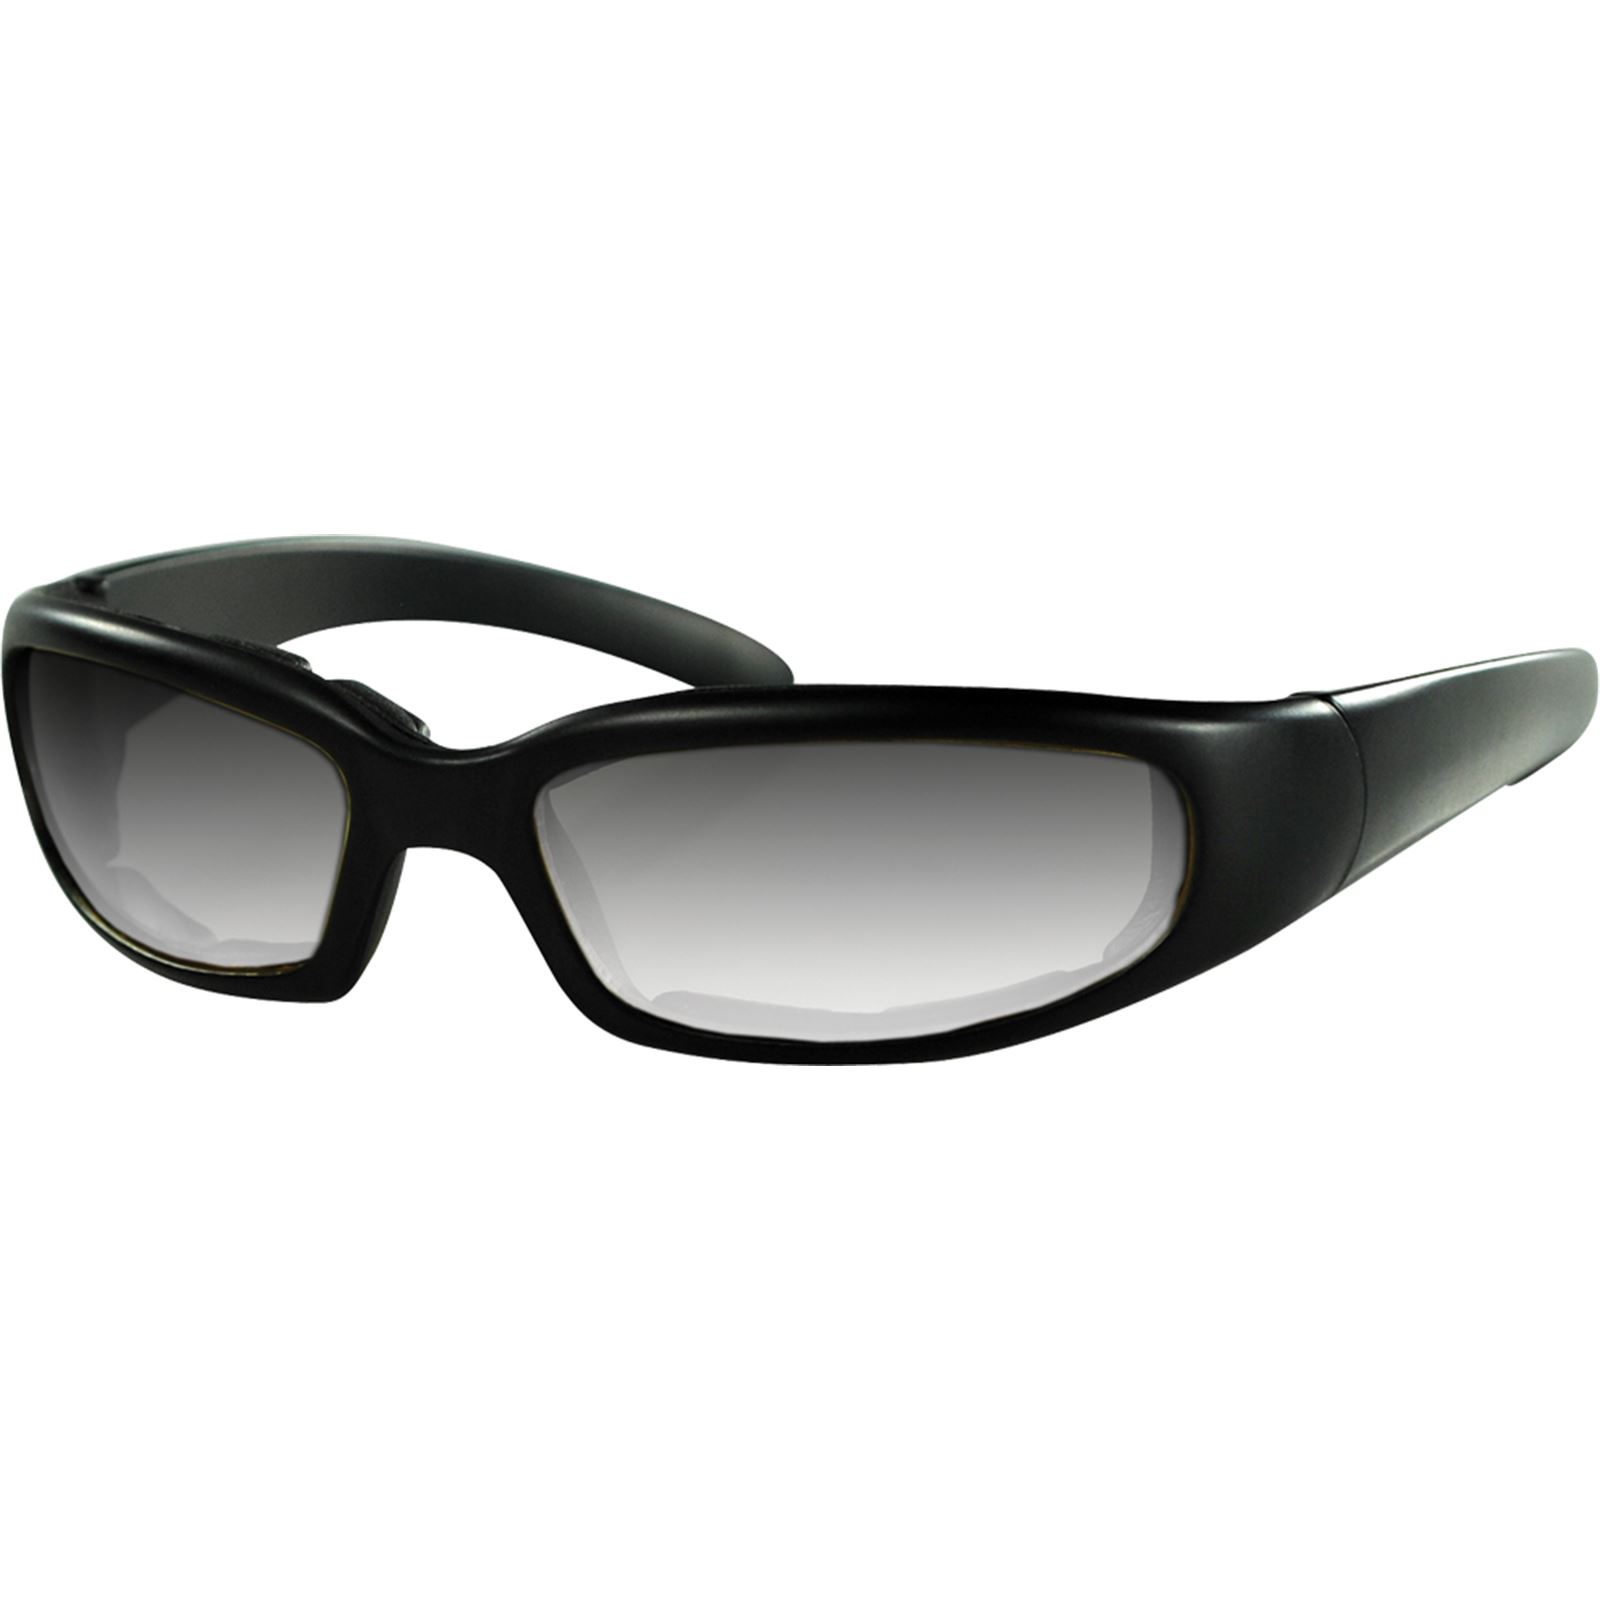 Zan New York Sunglasses w/Foam